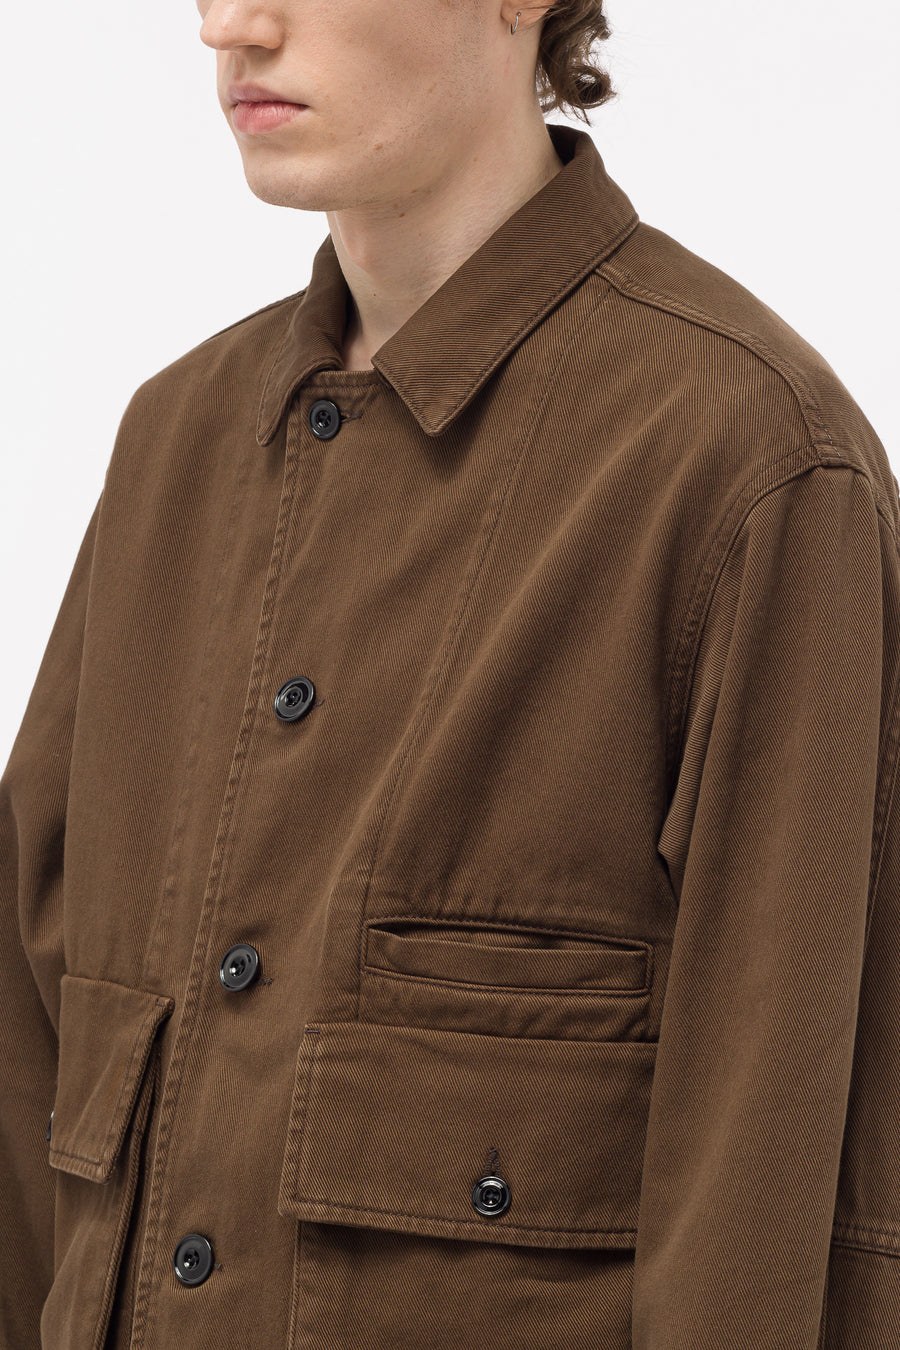 LEMAIRE - Men's Boxy Jacket in Dark Brown - Notre